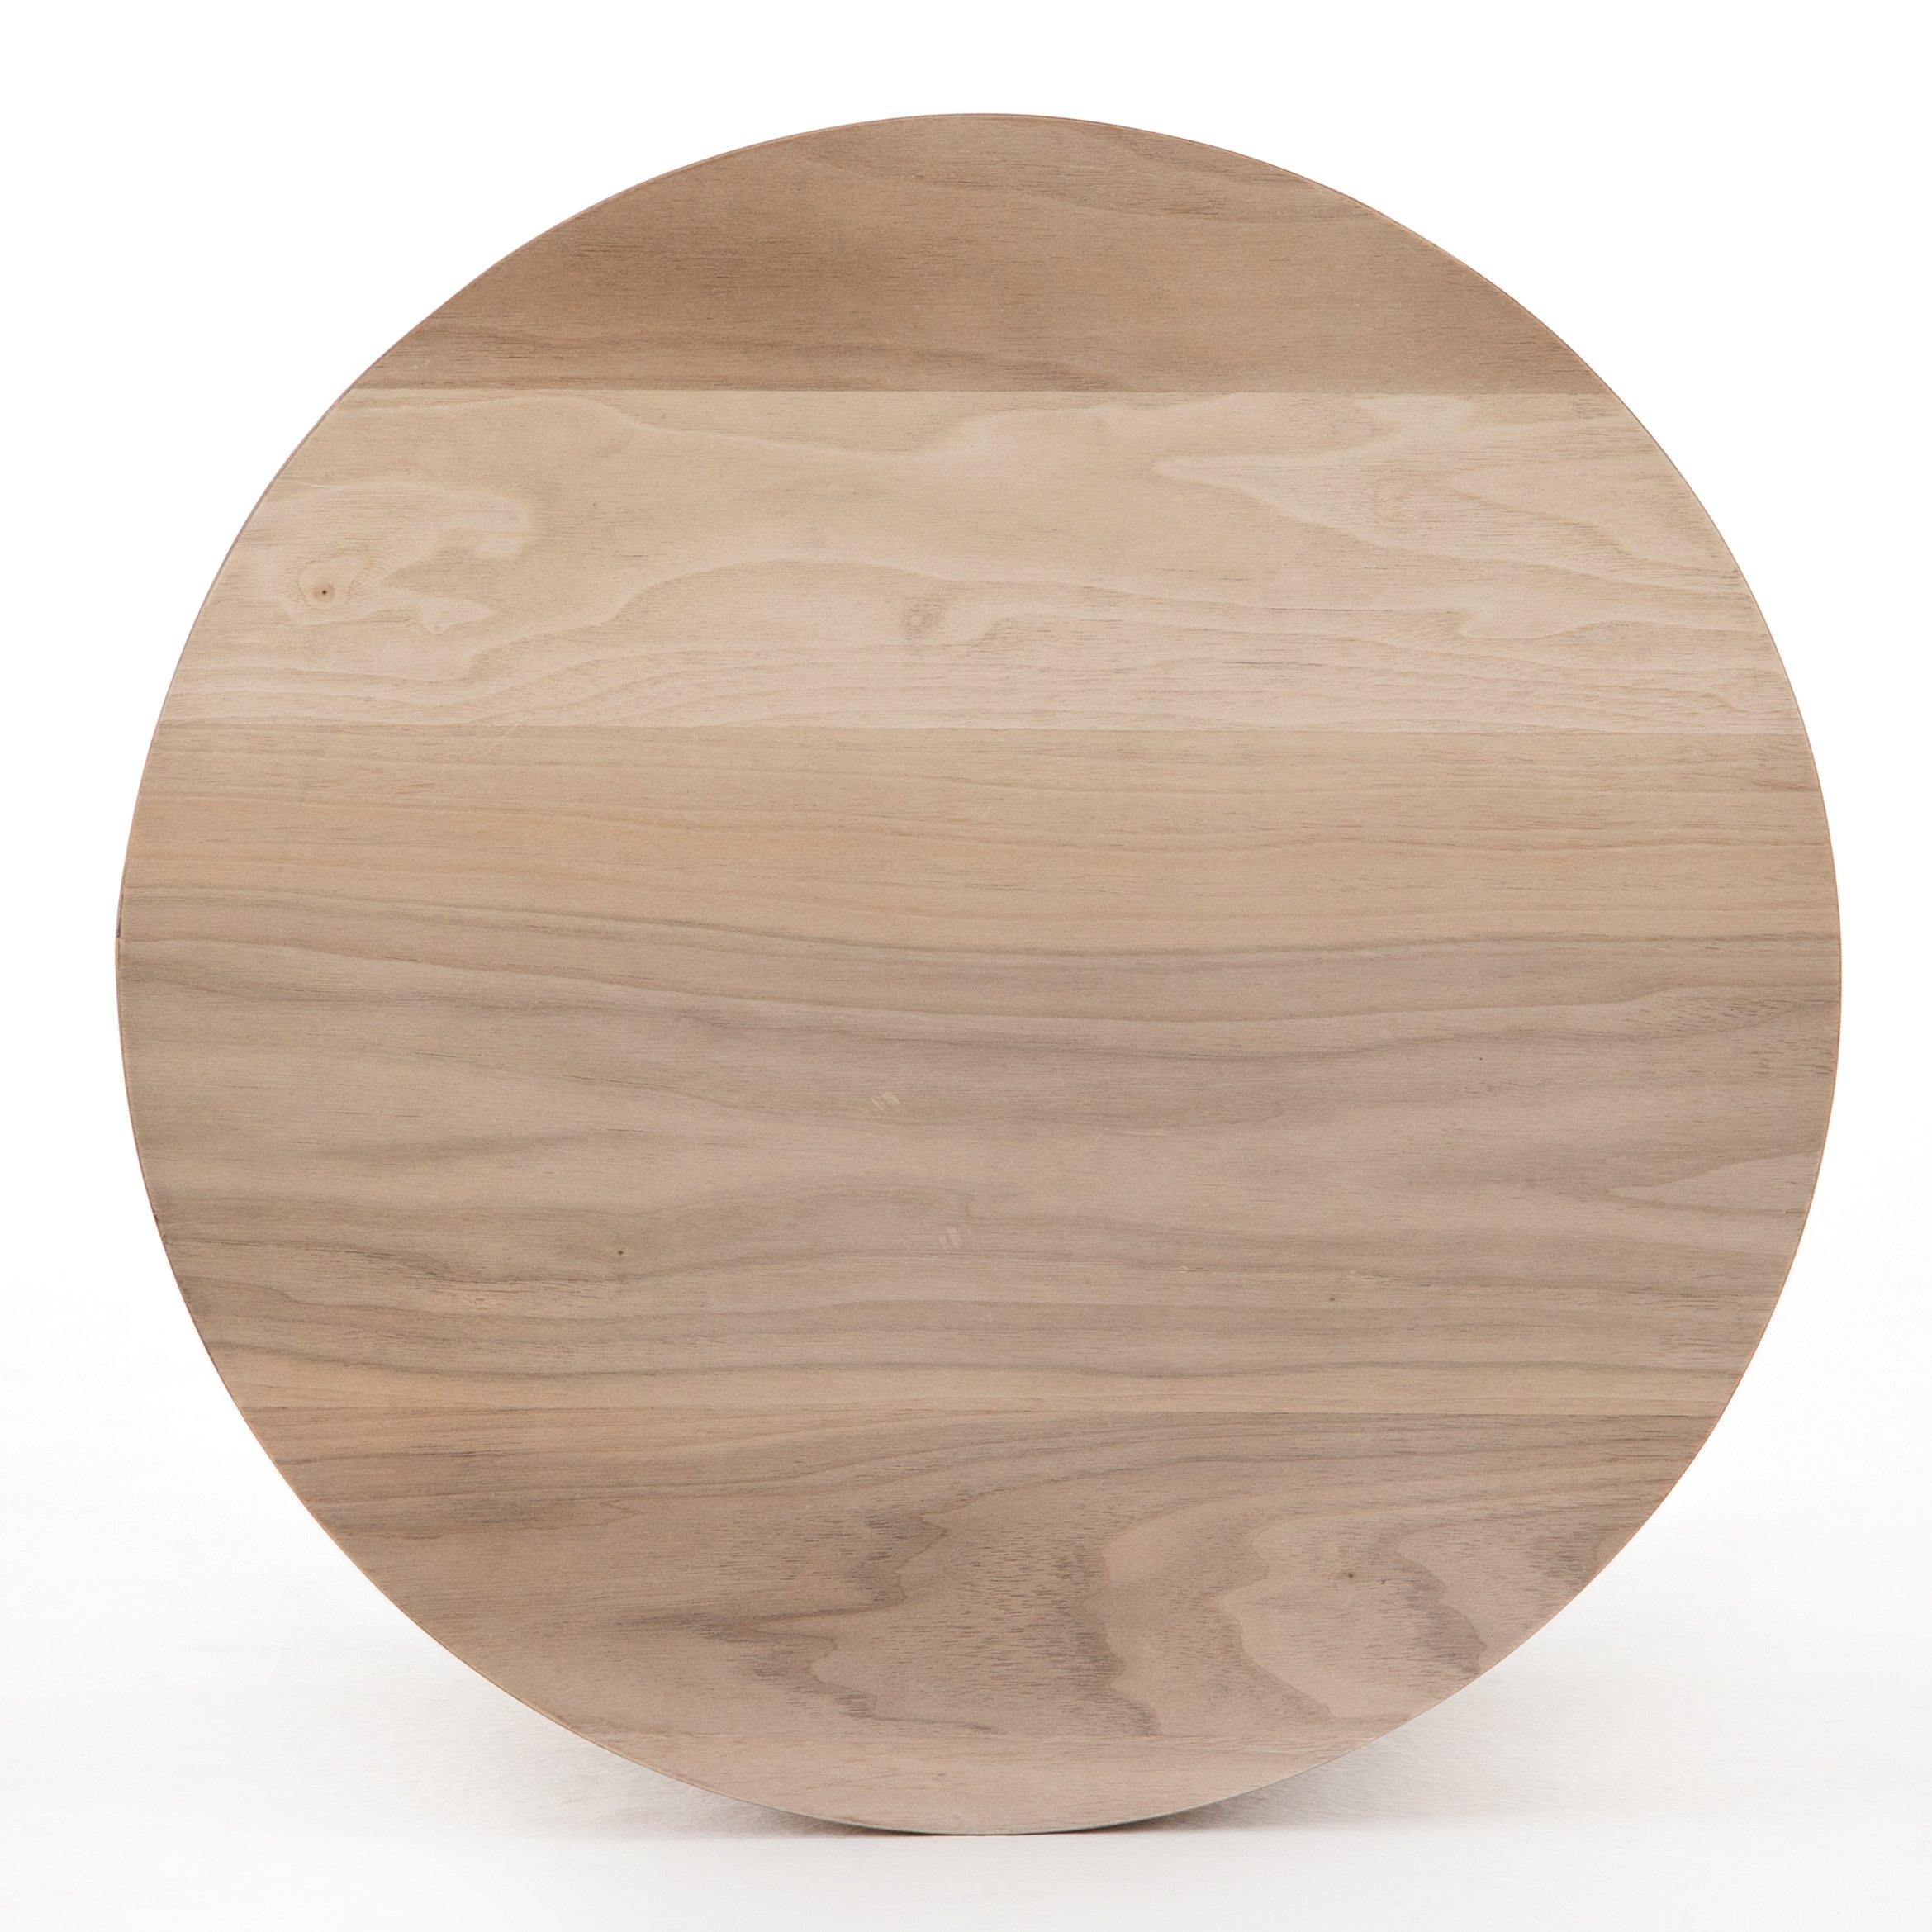 Hudson Round End Table, Walnut - Reimagine Designs - new, Side Tables